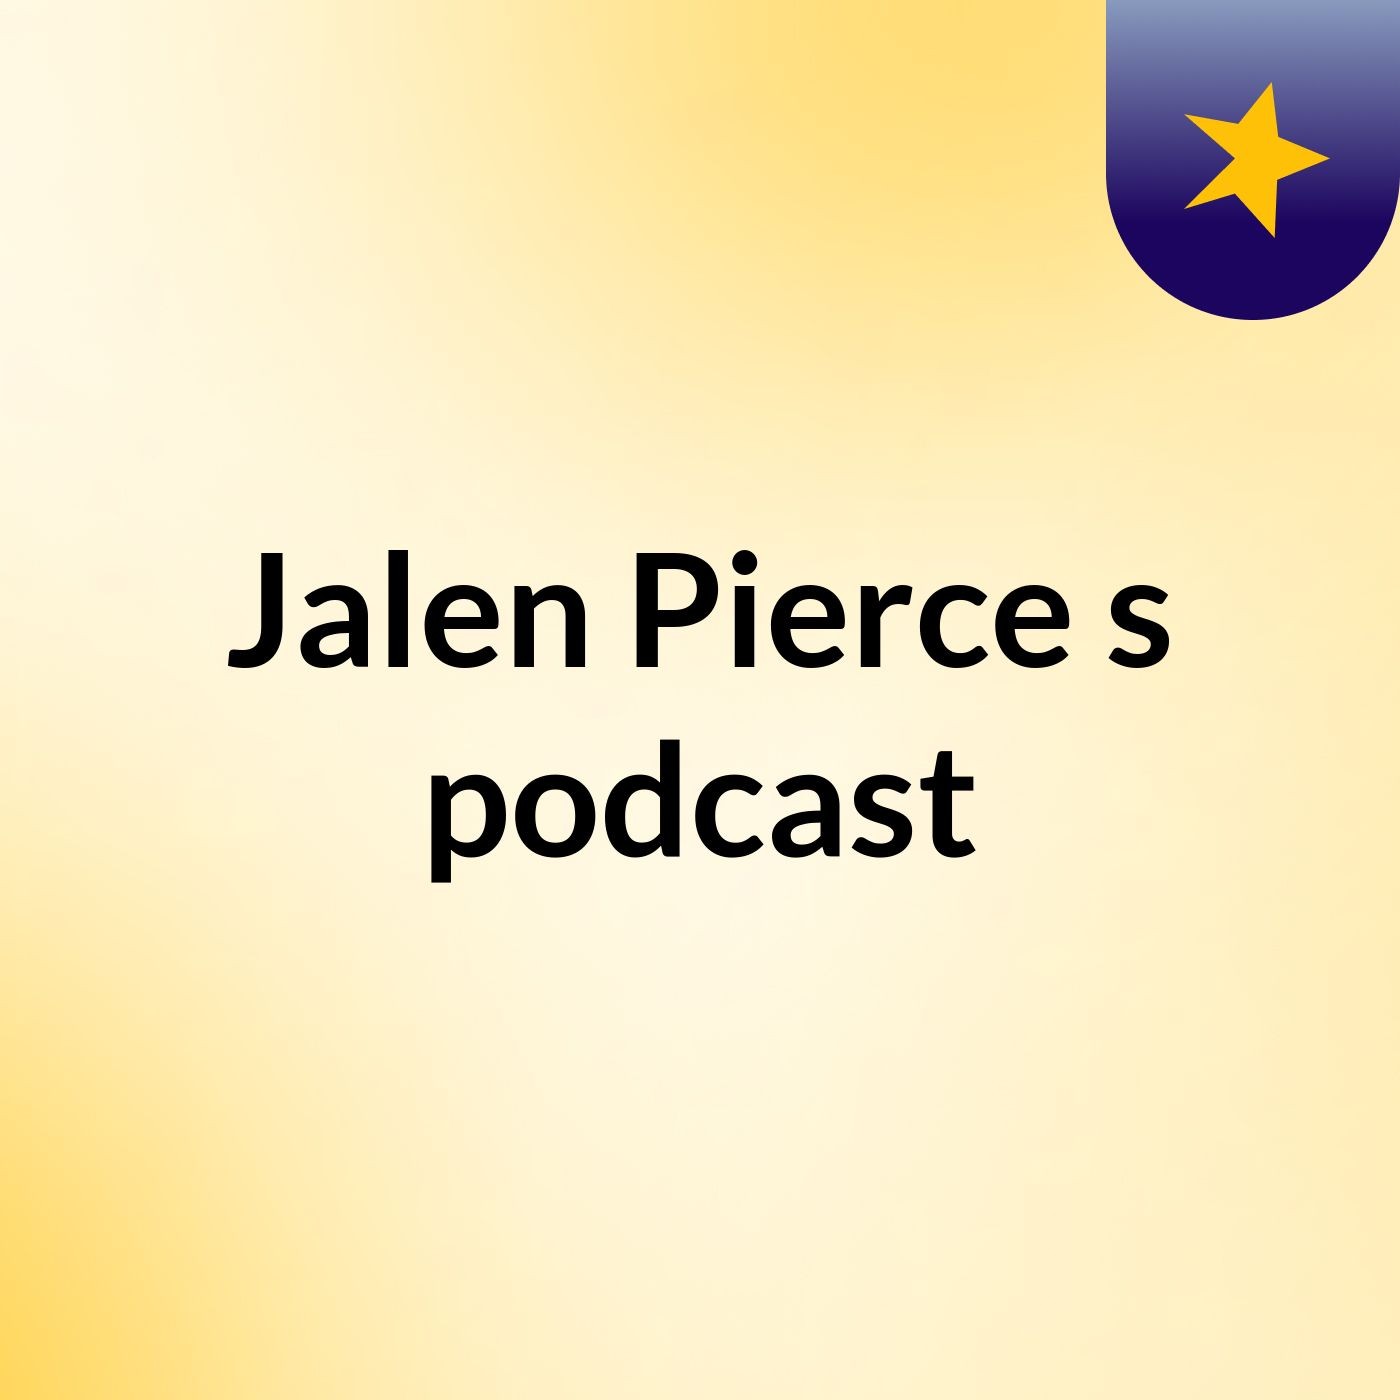 Episode 2 - Jalen Pierce's podcast